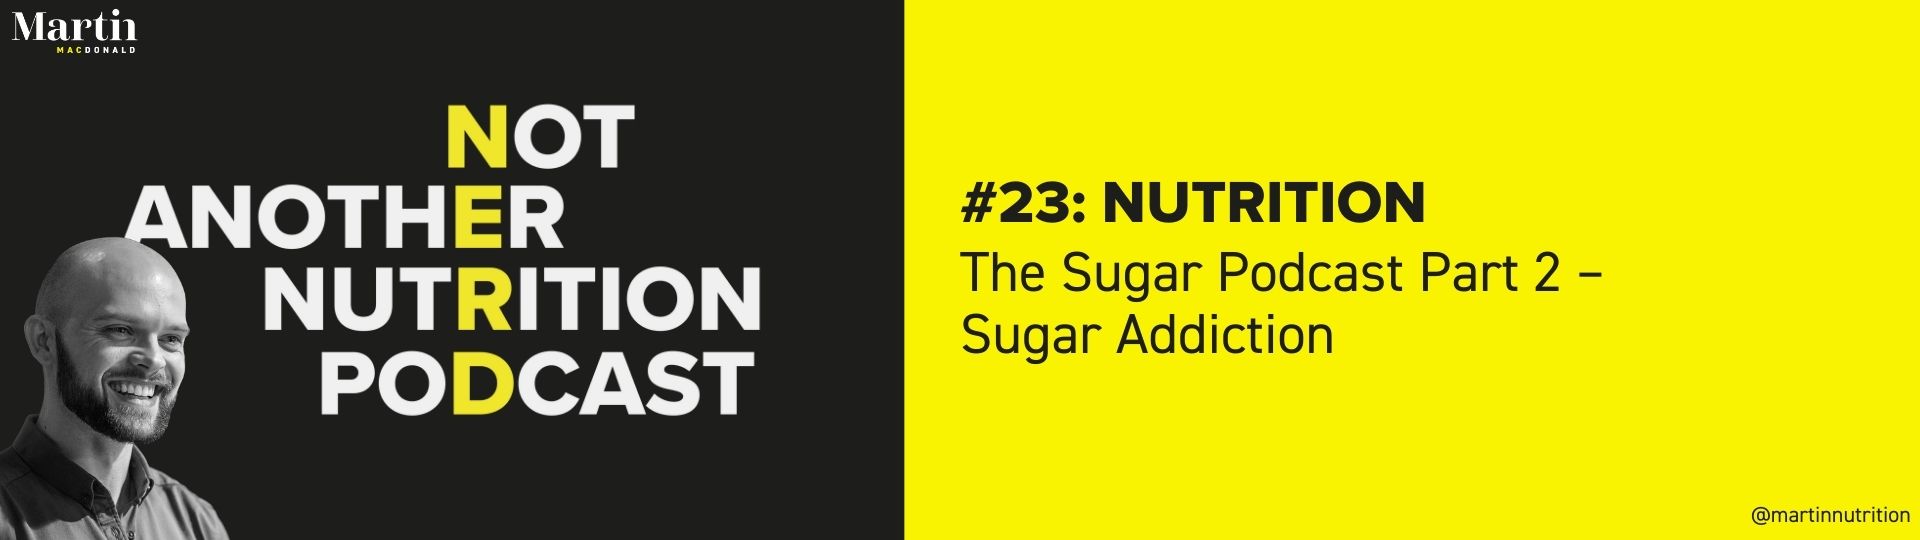 The Sugar Podcast Part 2 - Sugar Addiction